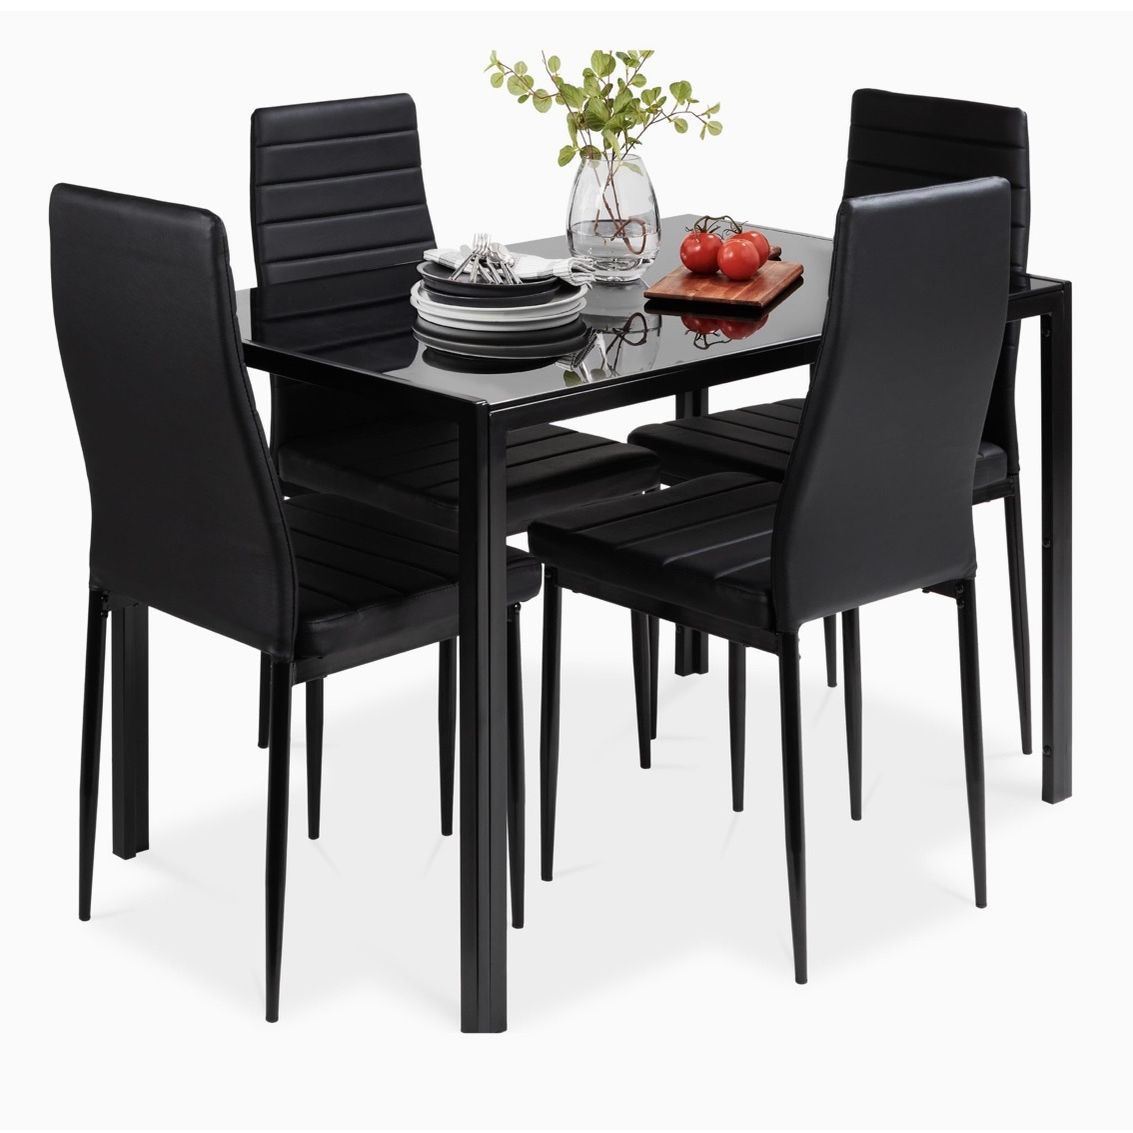 5-Piece Glass Dining Set, Modern Kitchen Table Furniture for Dining Room, Dinette, Black